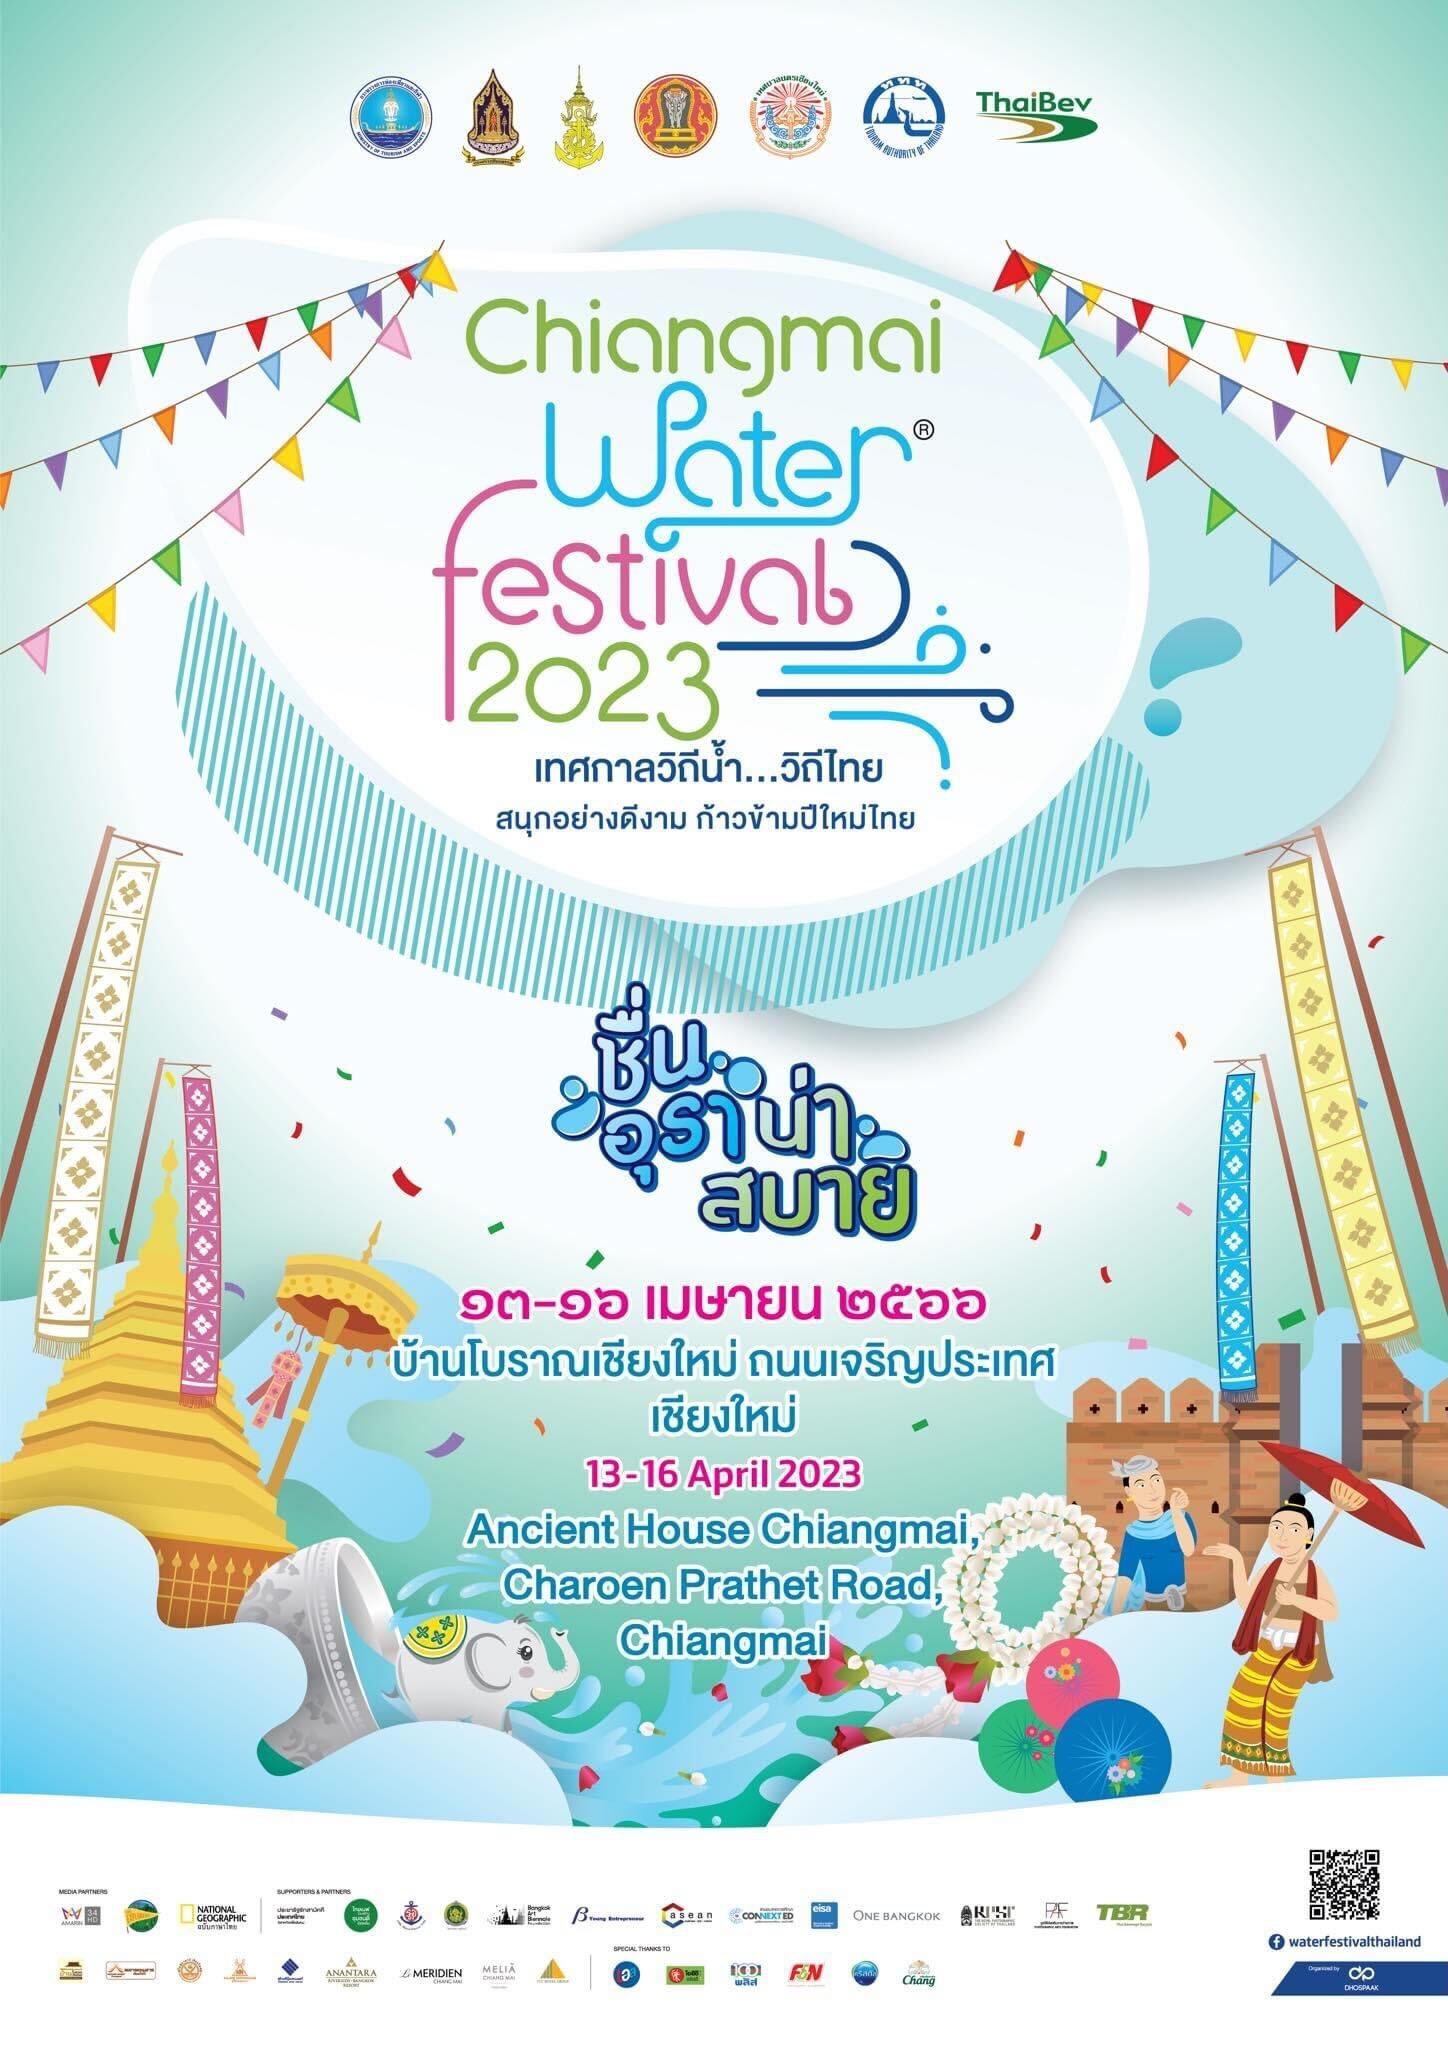 Water Festival Thailand Chiangmai Water Festival 2023 Chiang Mai Kids